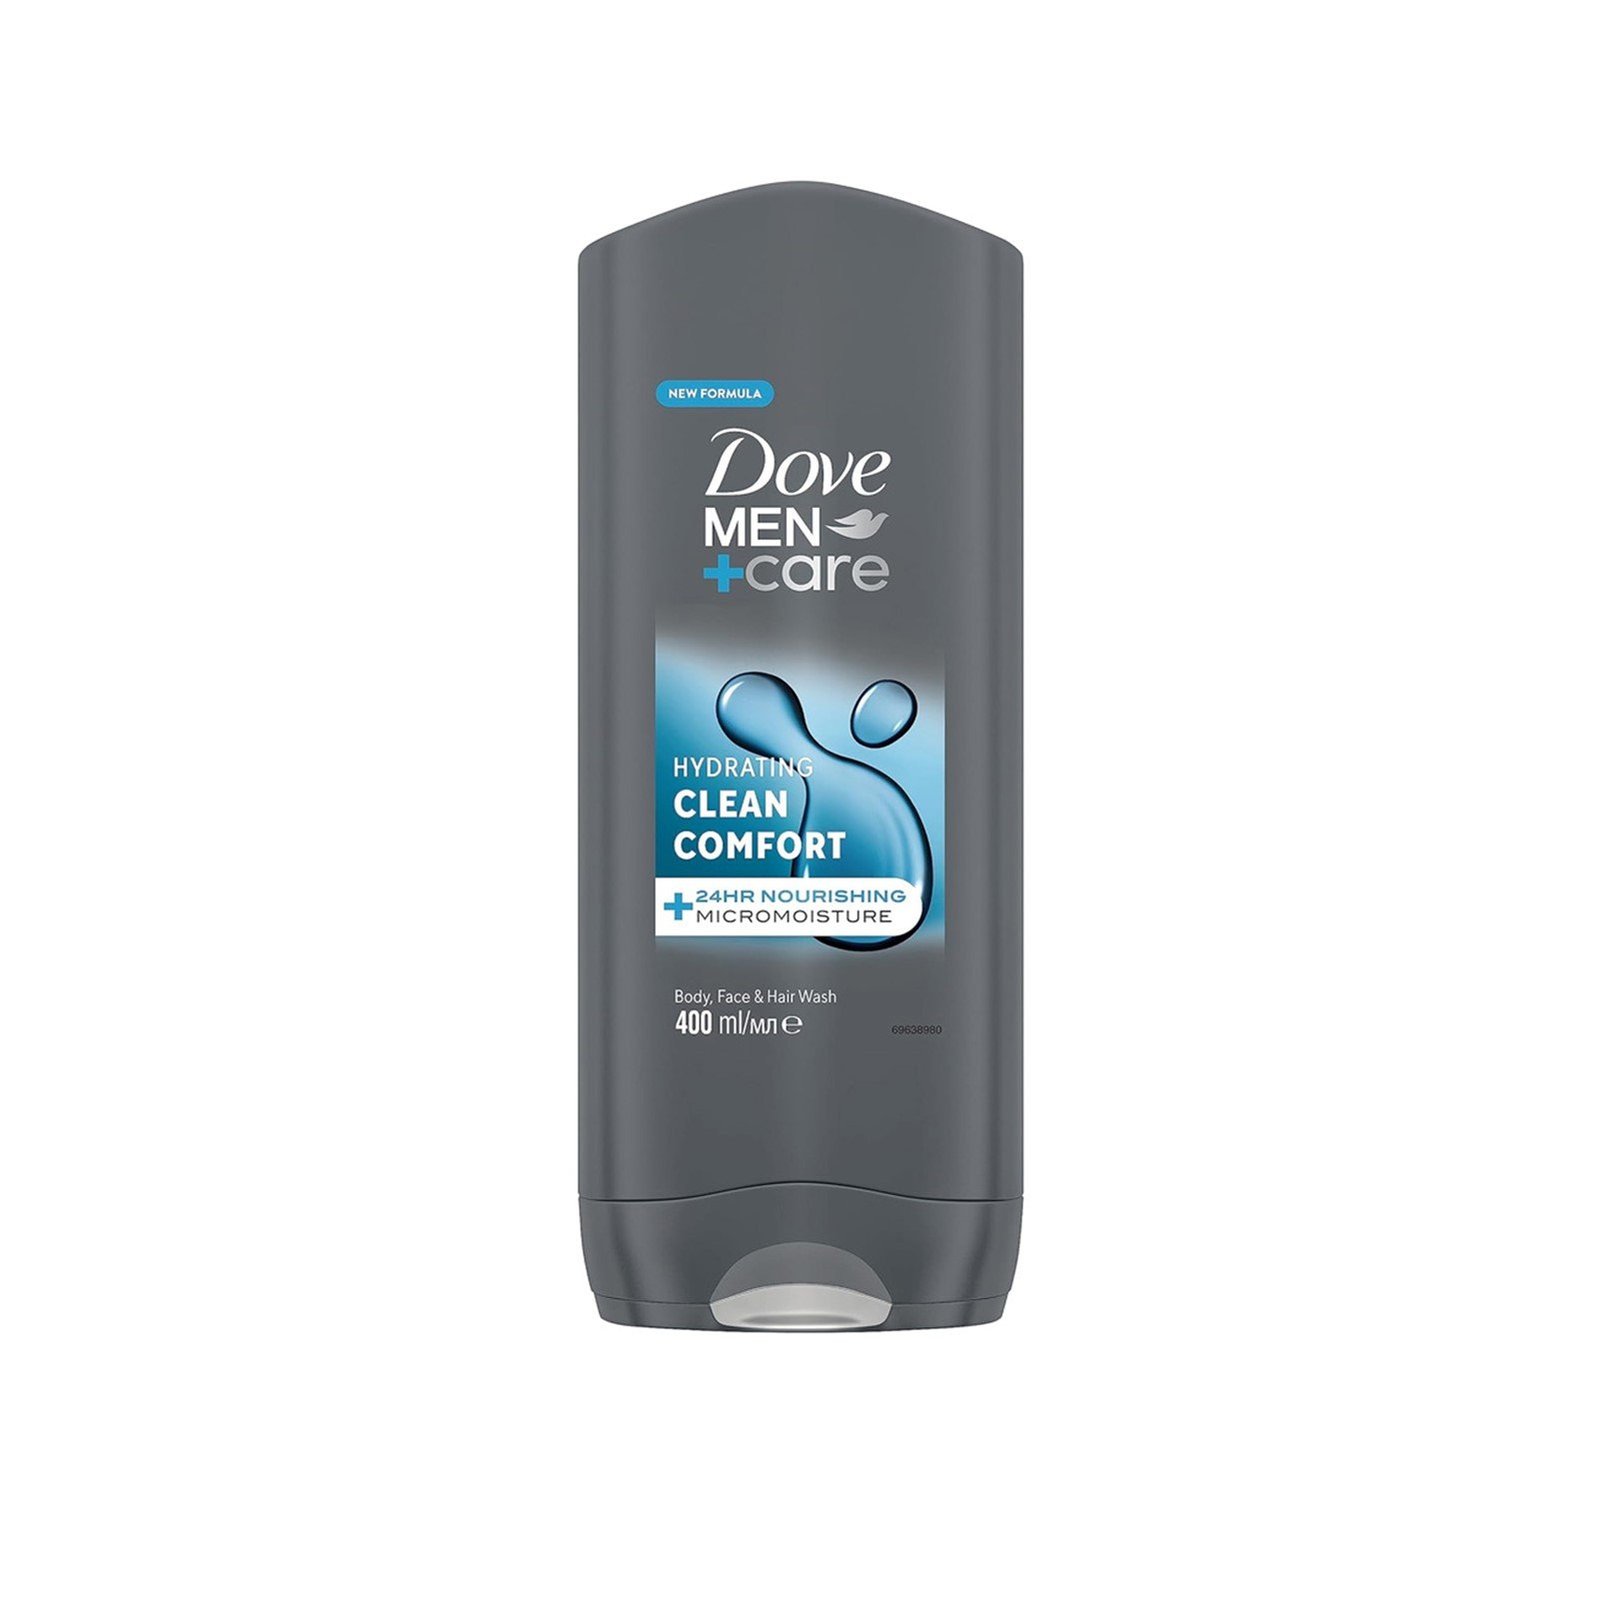 Dove Men+Care Clean Comfort Body, Face & Hair Wash 400ml